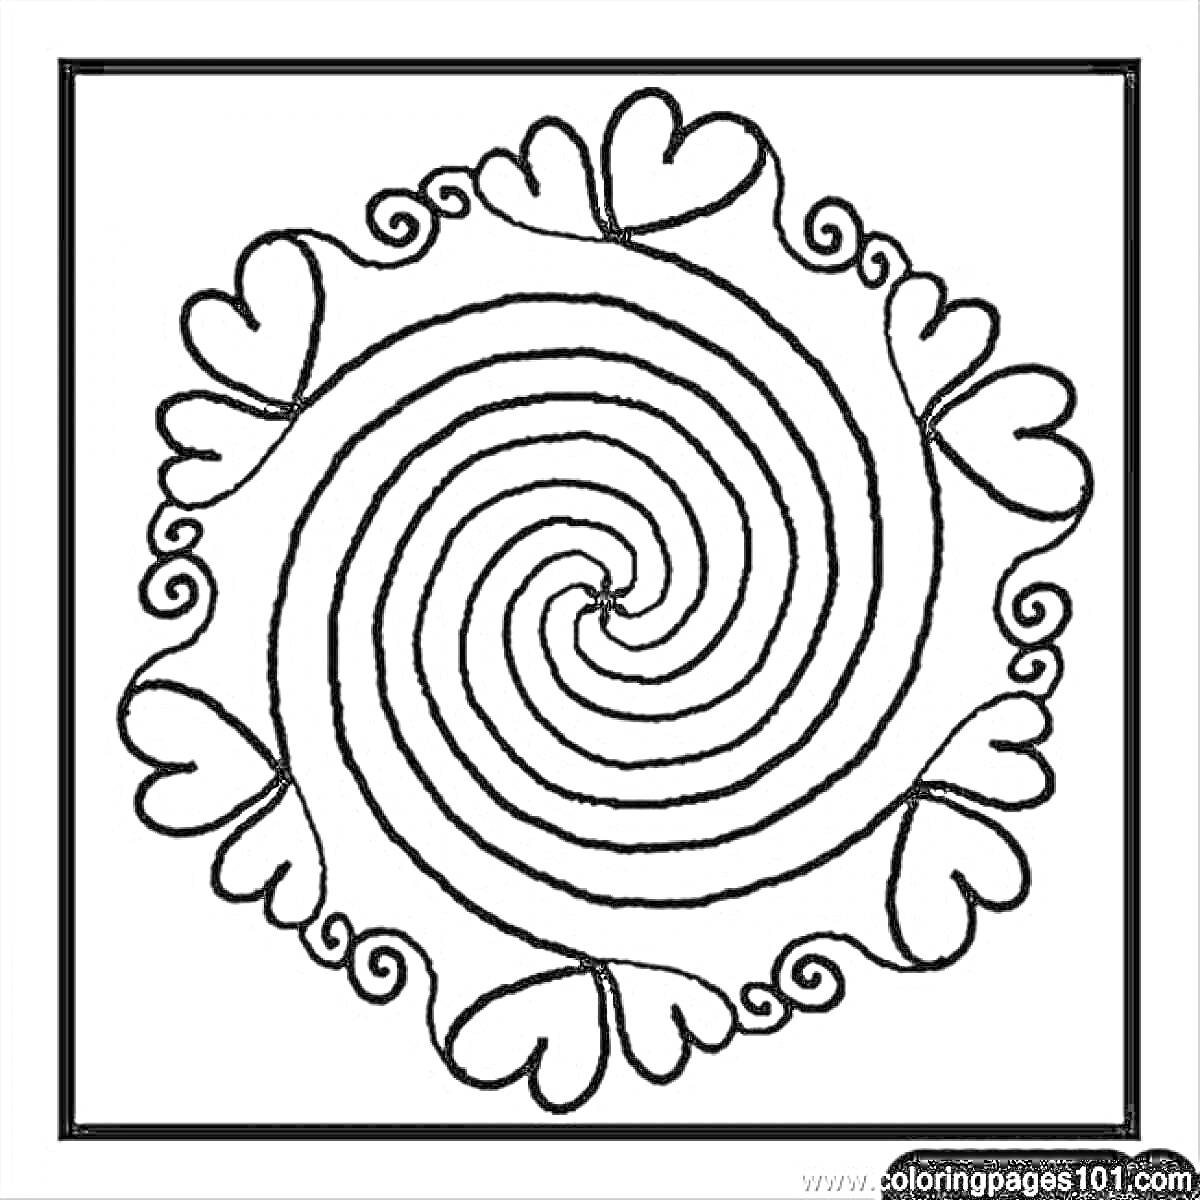 Раскраска Спираль с сердечками и волнистыми линиями внутри квадрата